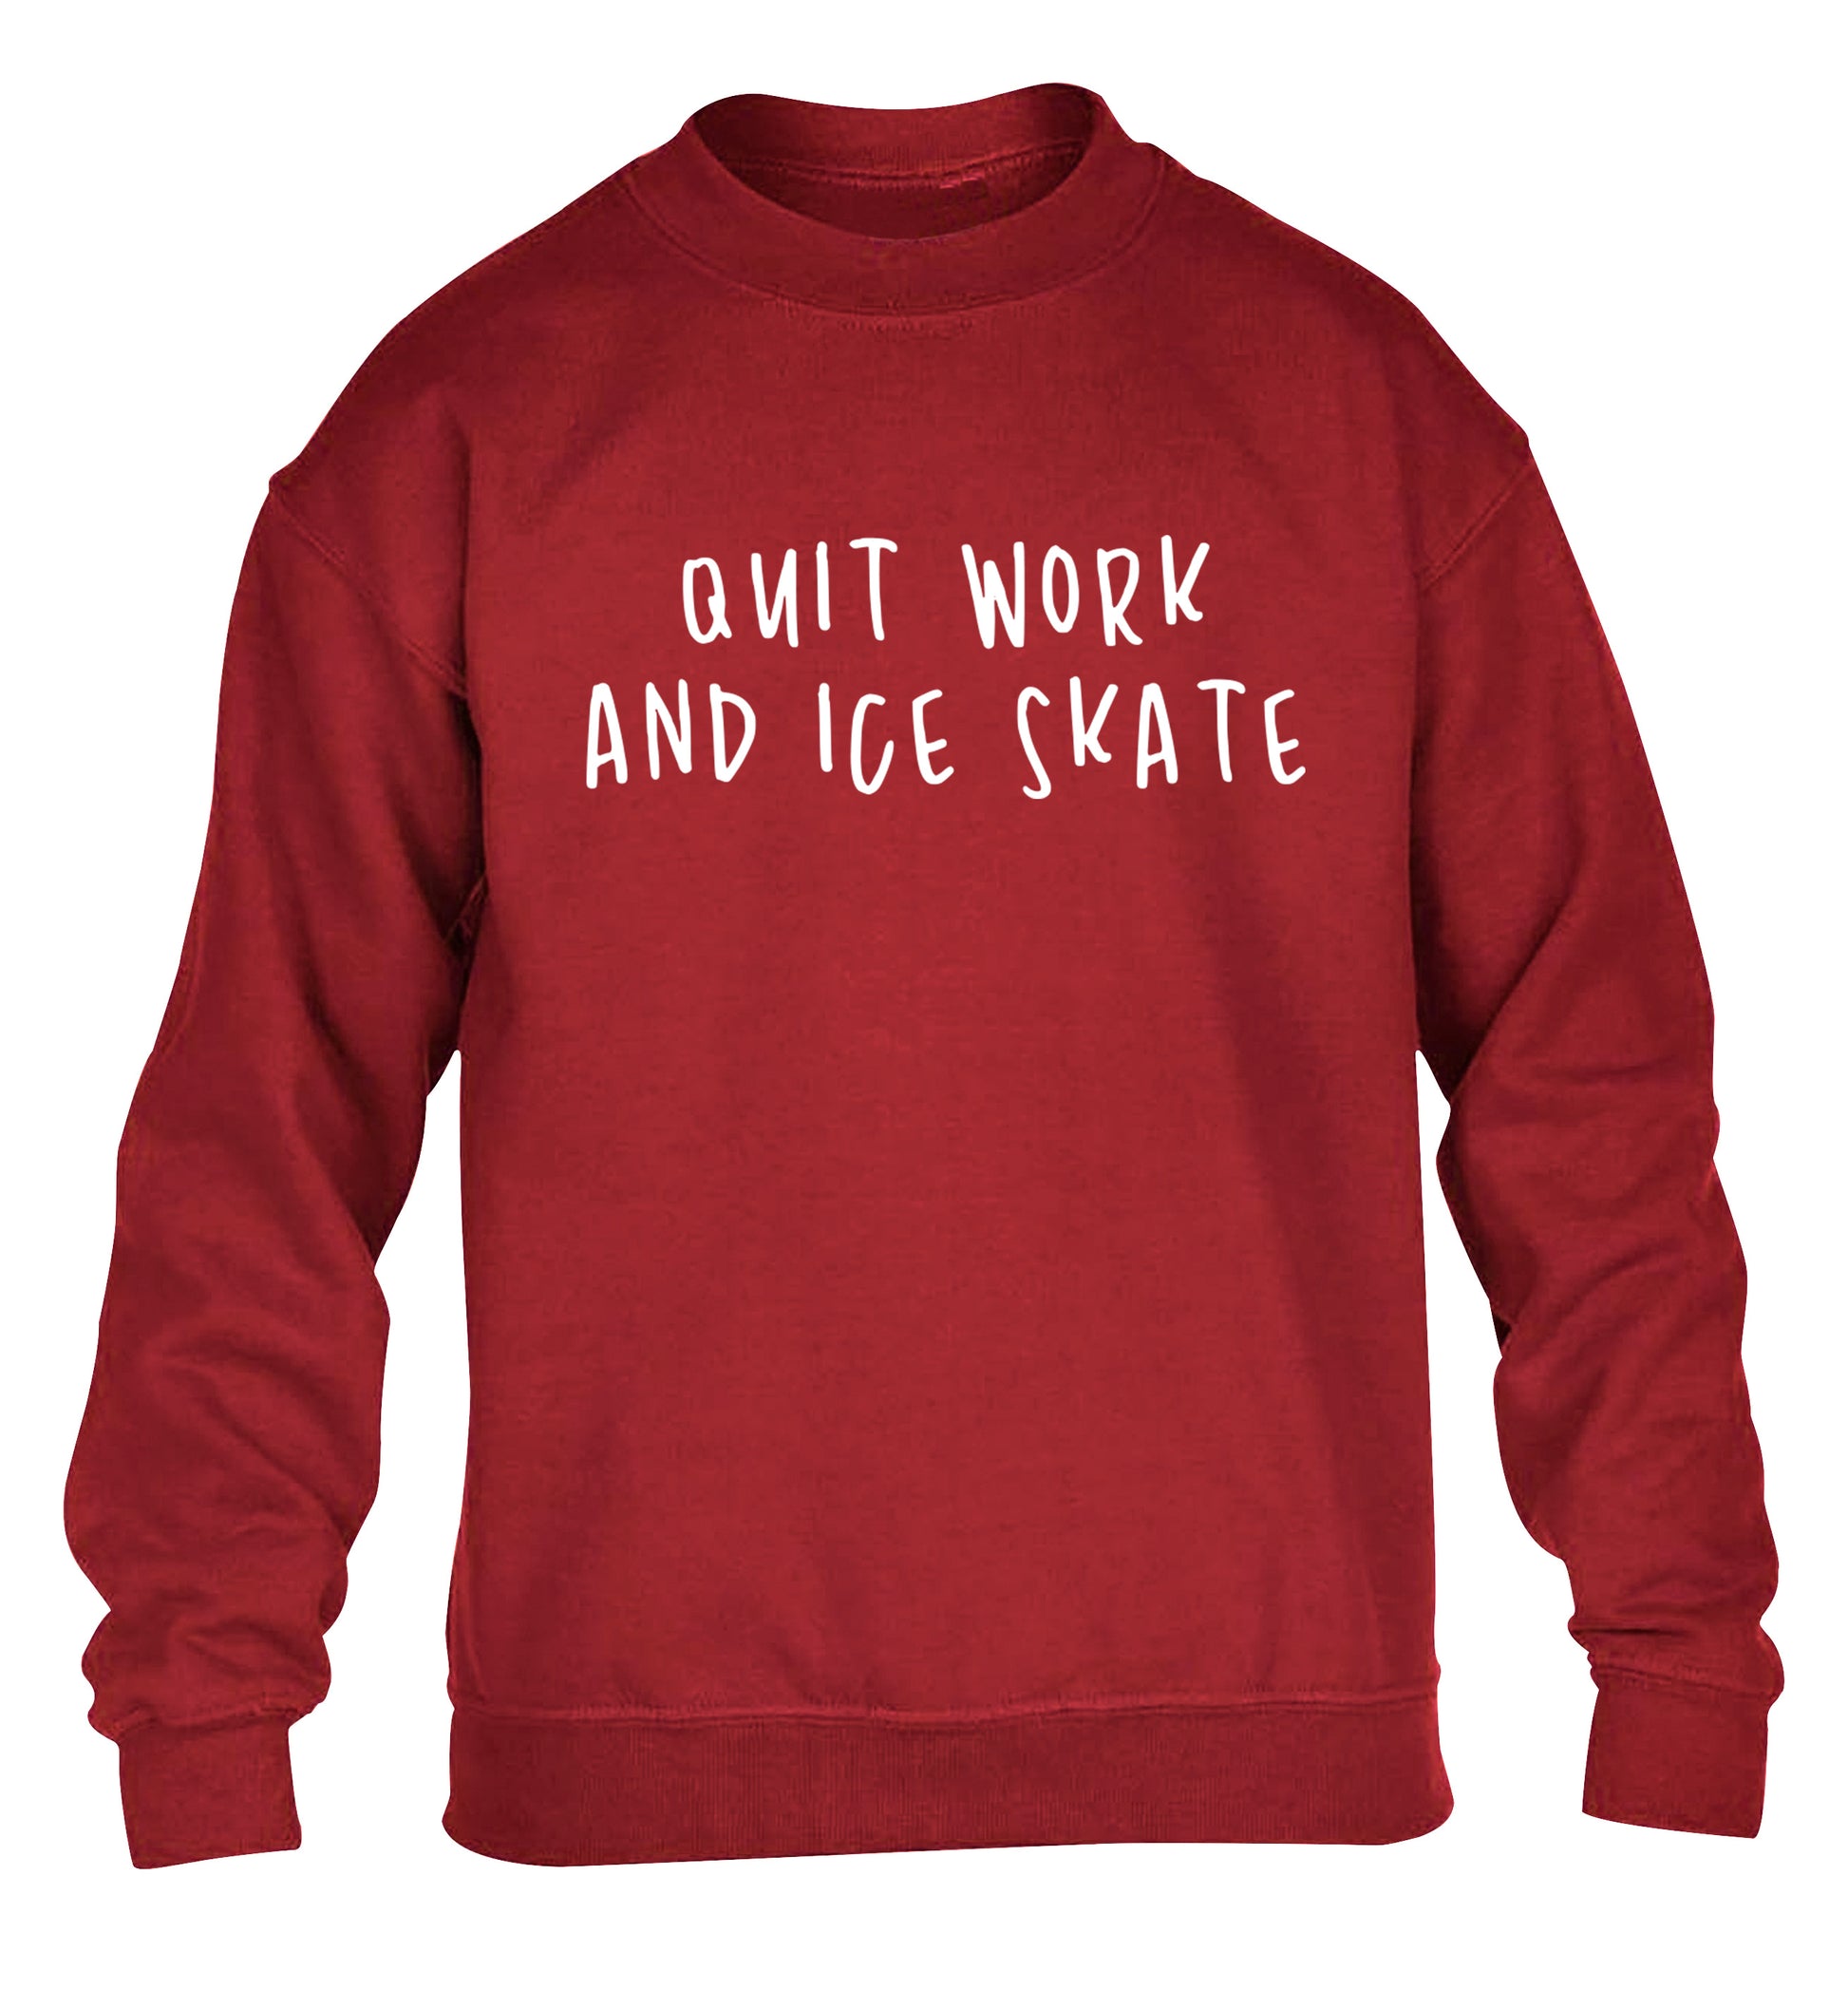 Quit work ice skate children's grey sweater 12-14 Years